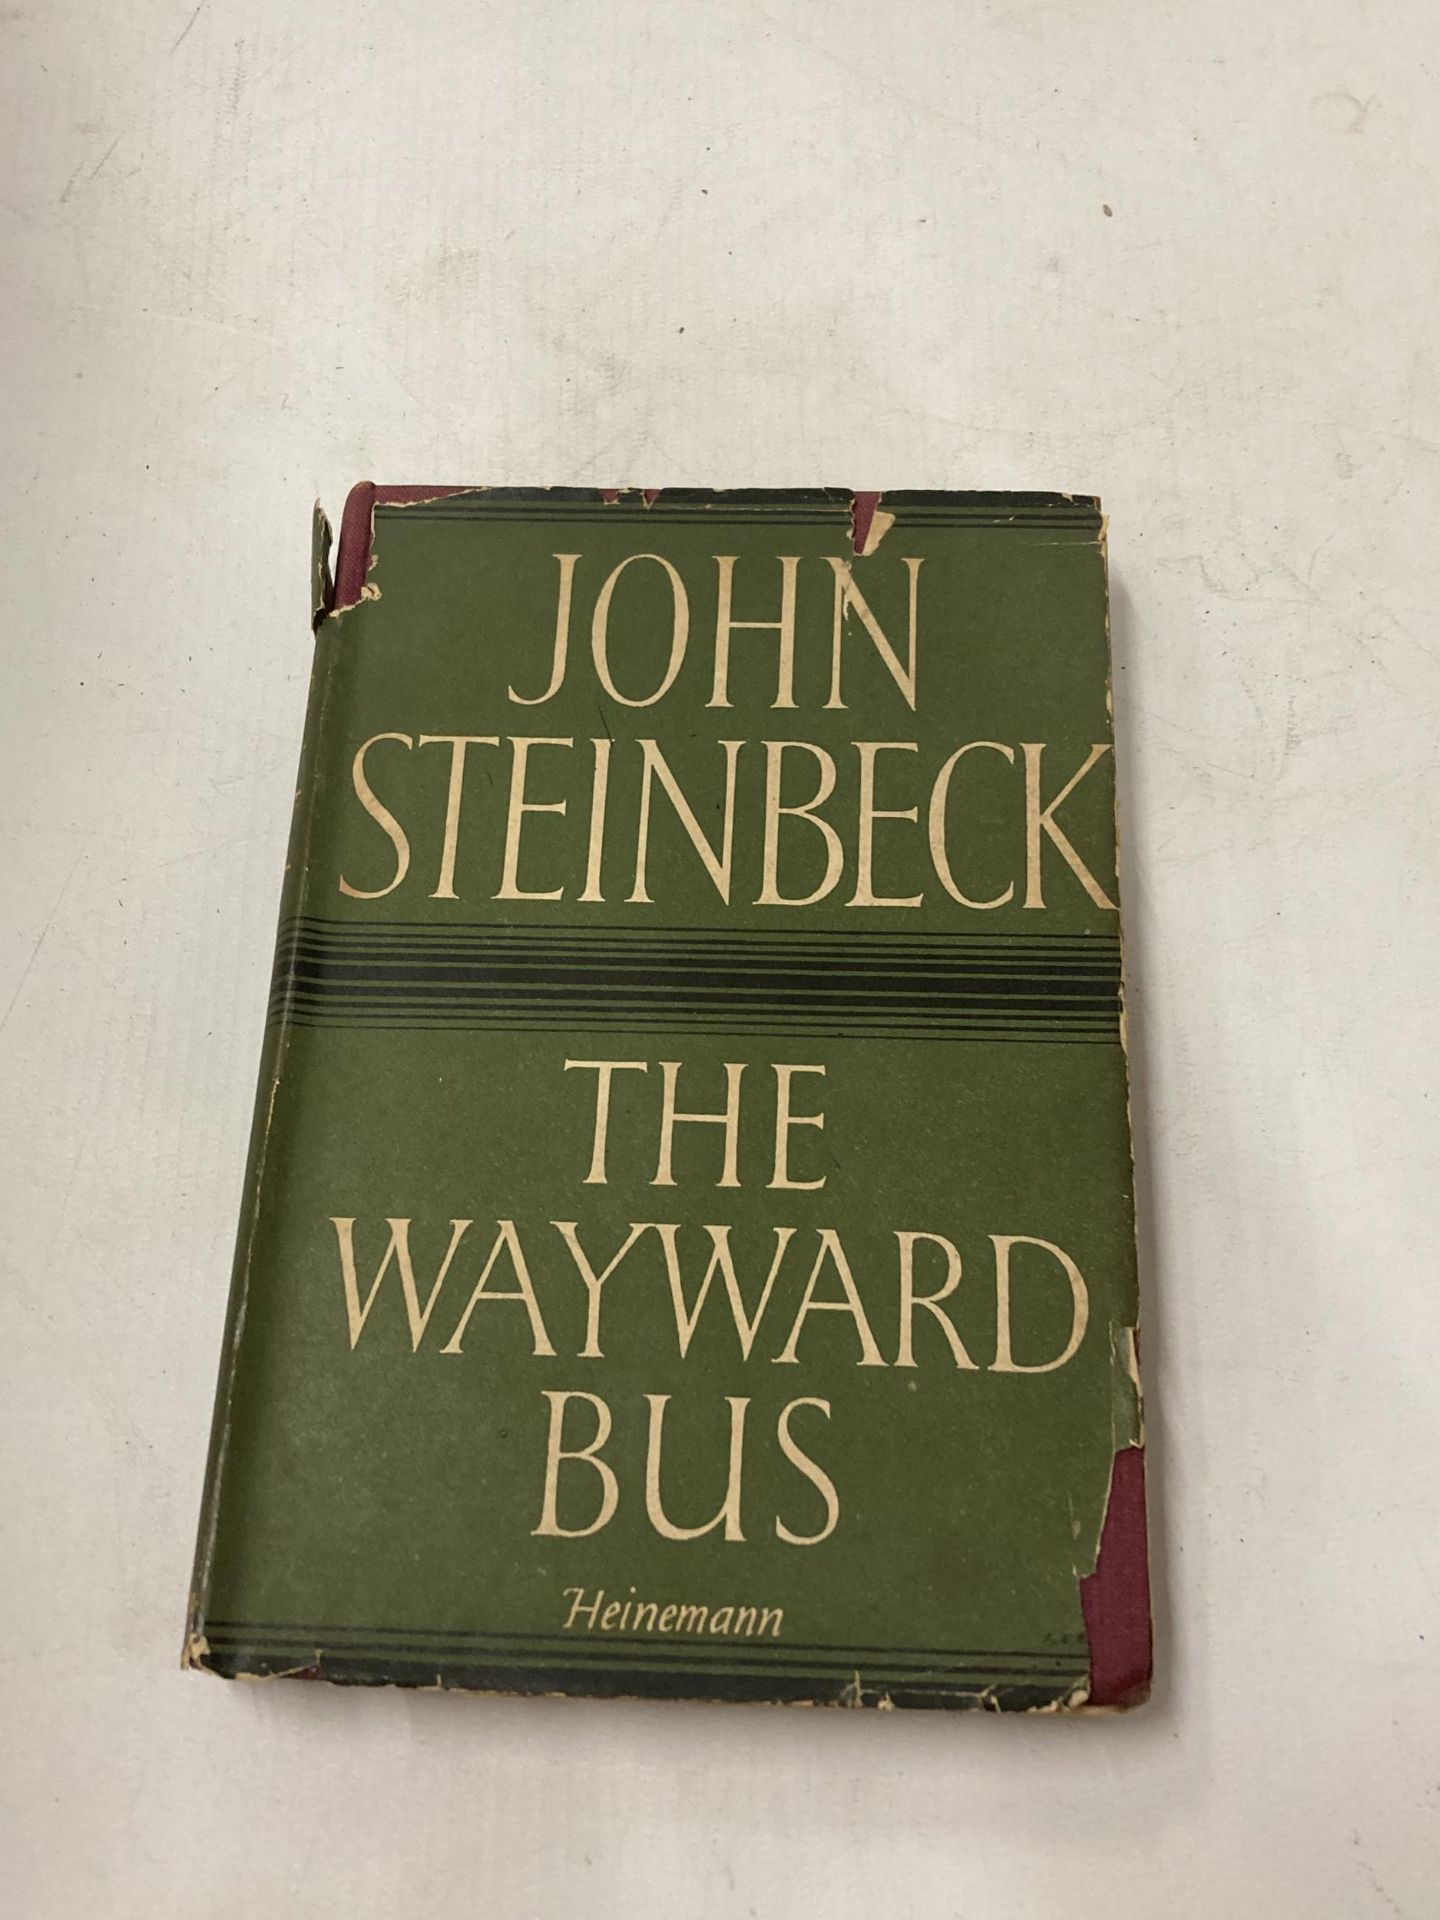 JOHN STEINBECK 'THE WAYWARD BUS' 1ST EDITION 1947 BOOK